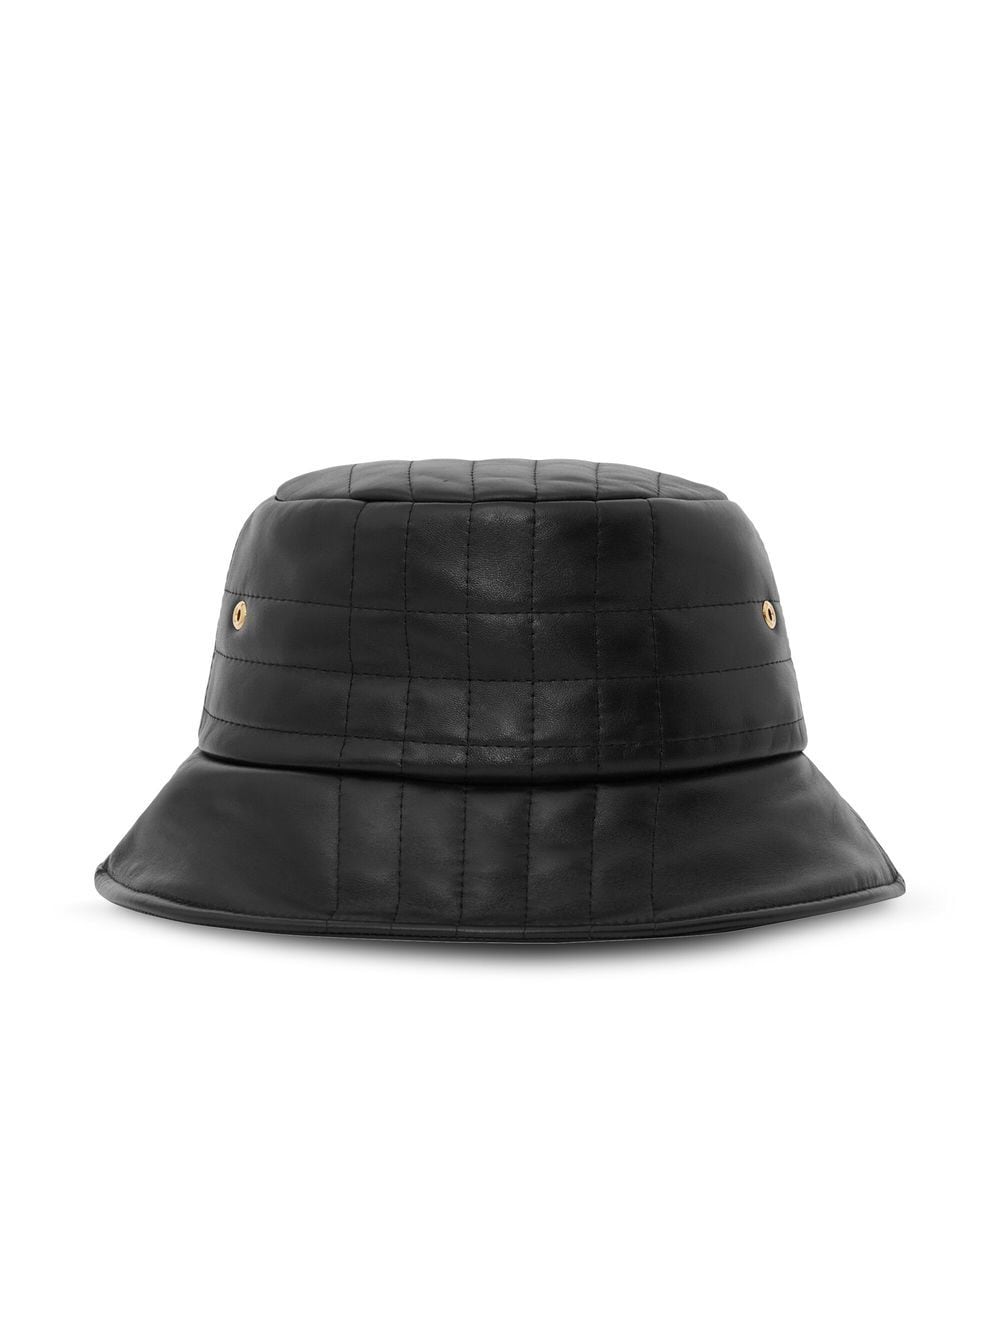 Burberry Monogram-Motif Quilted Bucket Hat - Farfetch